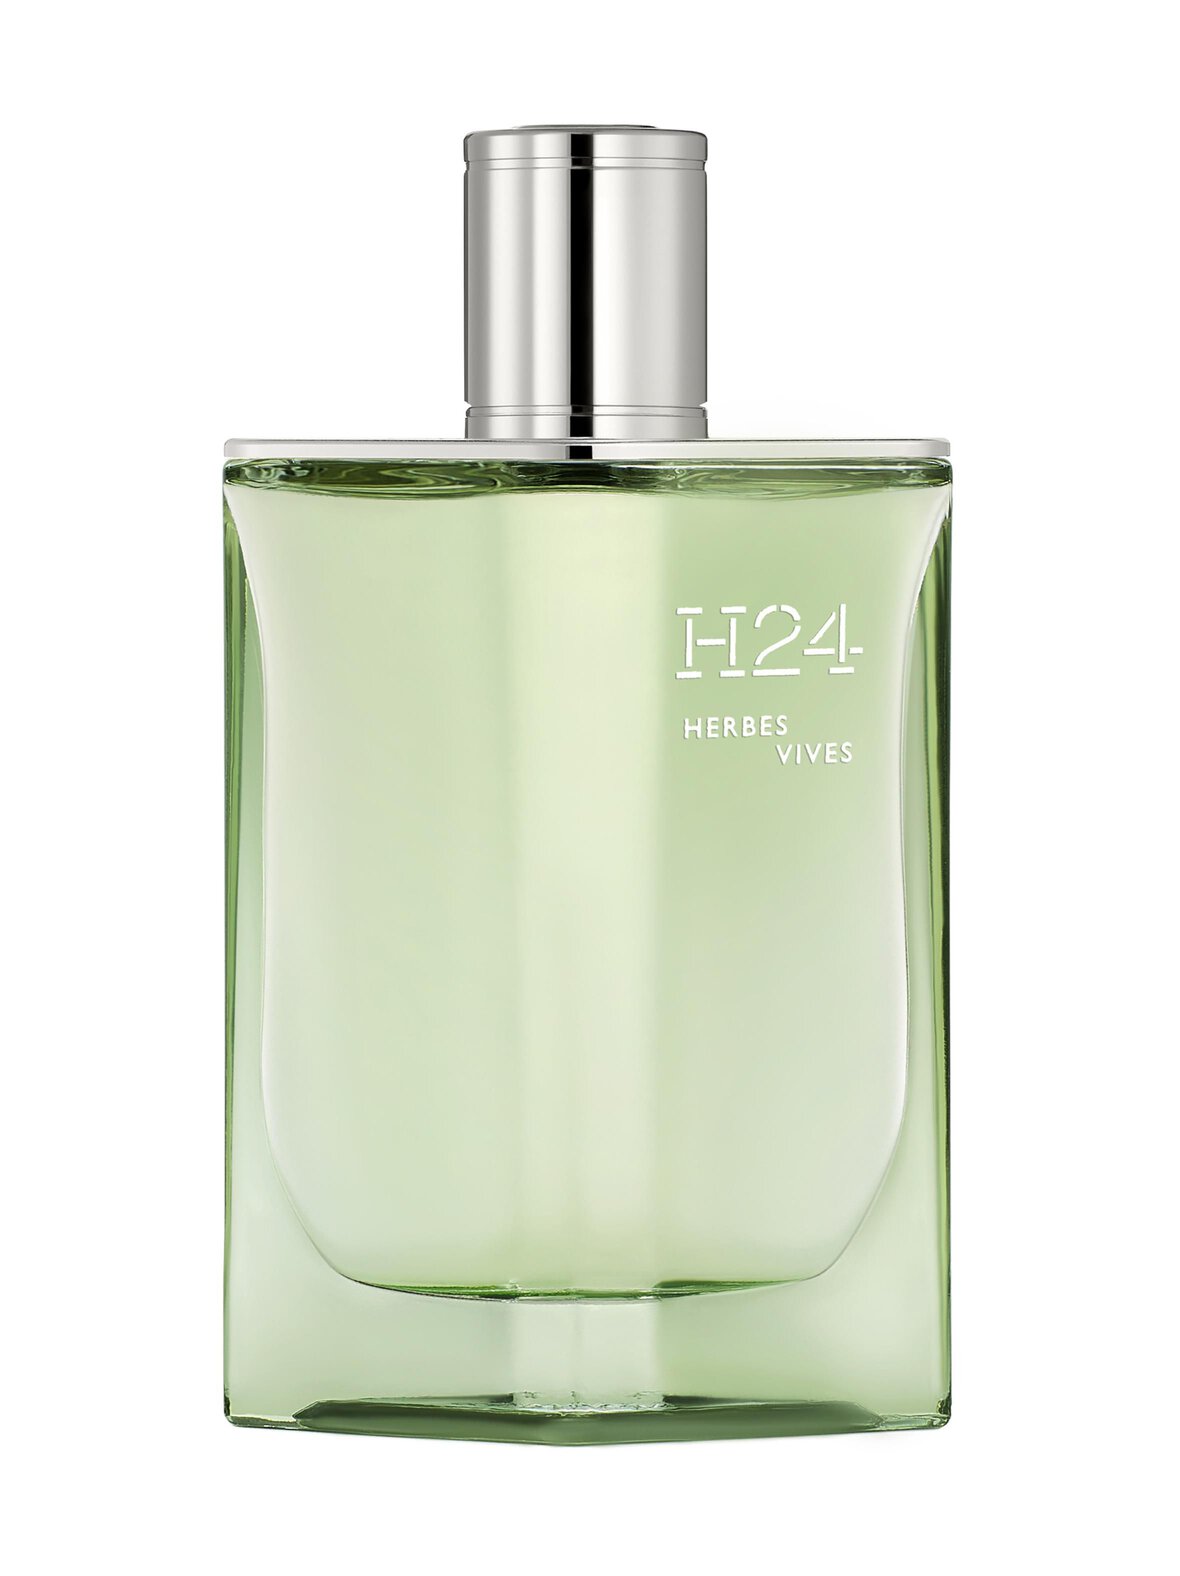 HERMÈS H24 herbes vives eau de parfum -tuoksu, uudeelleentäytettävä